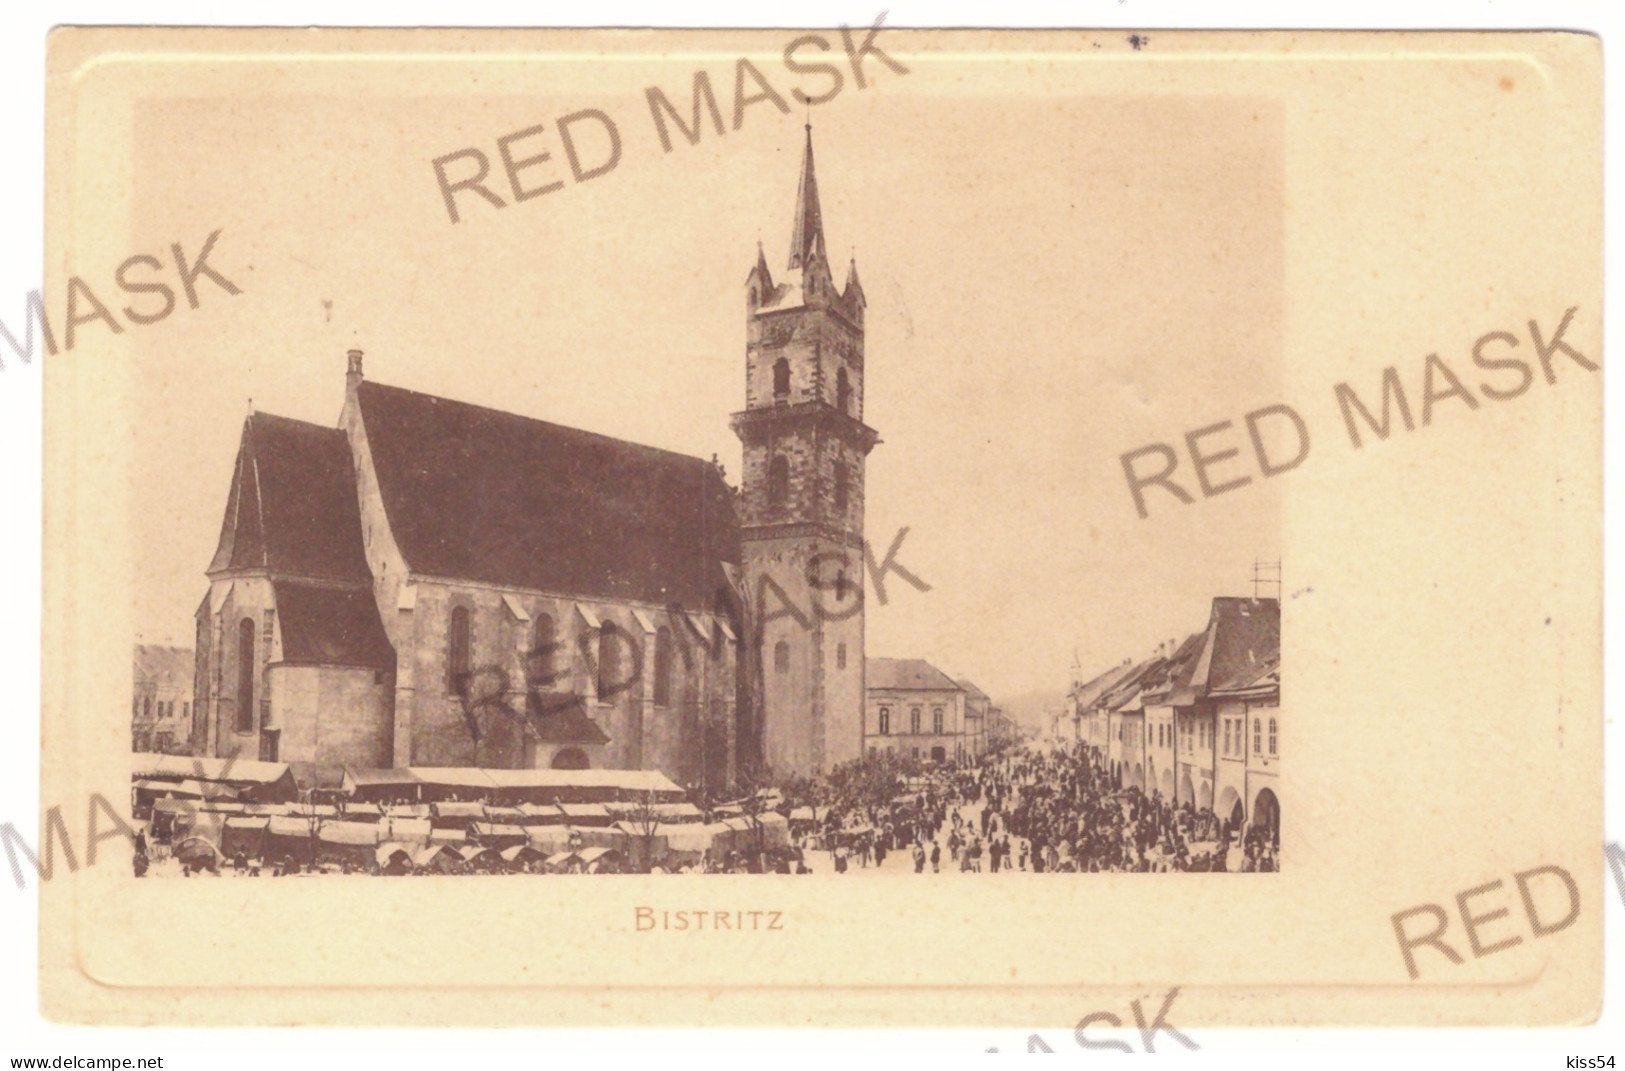 RO 45 - 20675 BISTRITA, Big Market & Church, Romania - Old Postcard - Used - 1906 - Rumänien